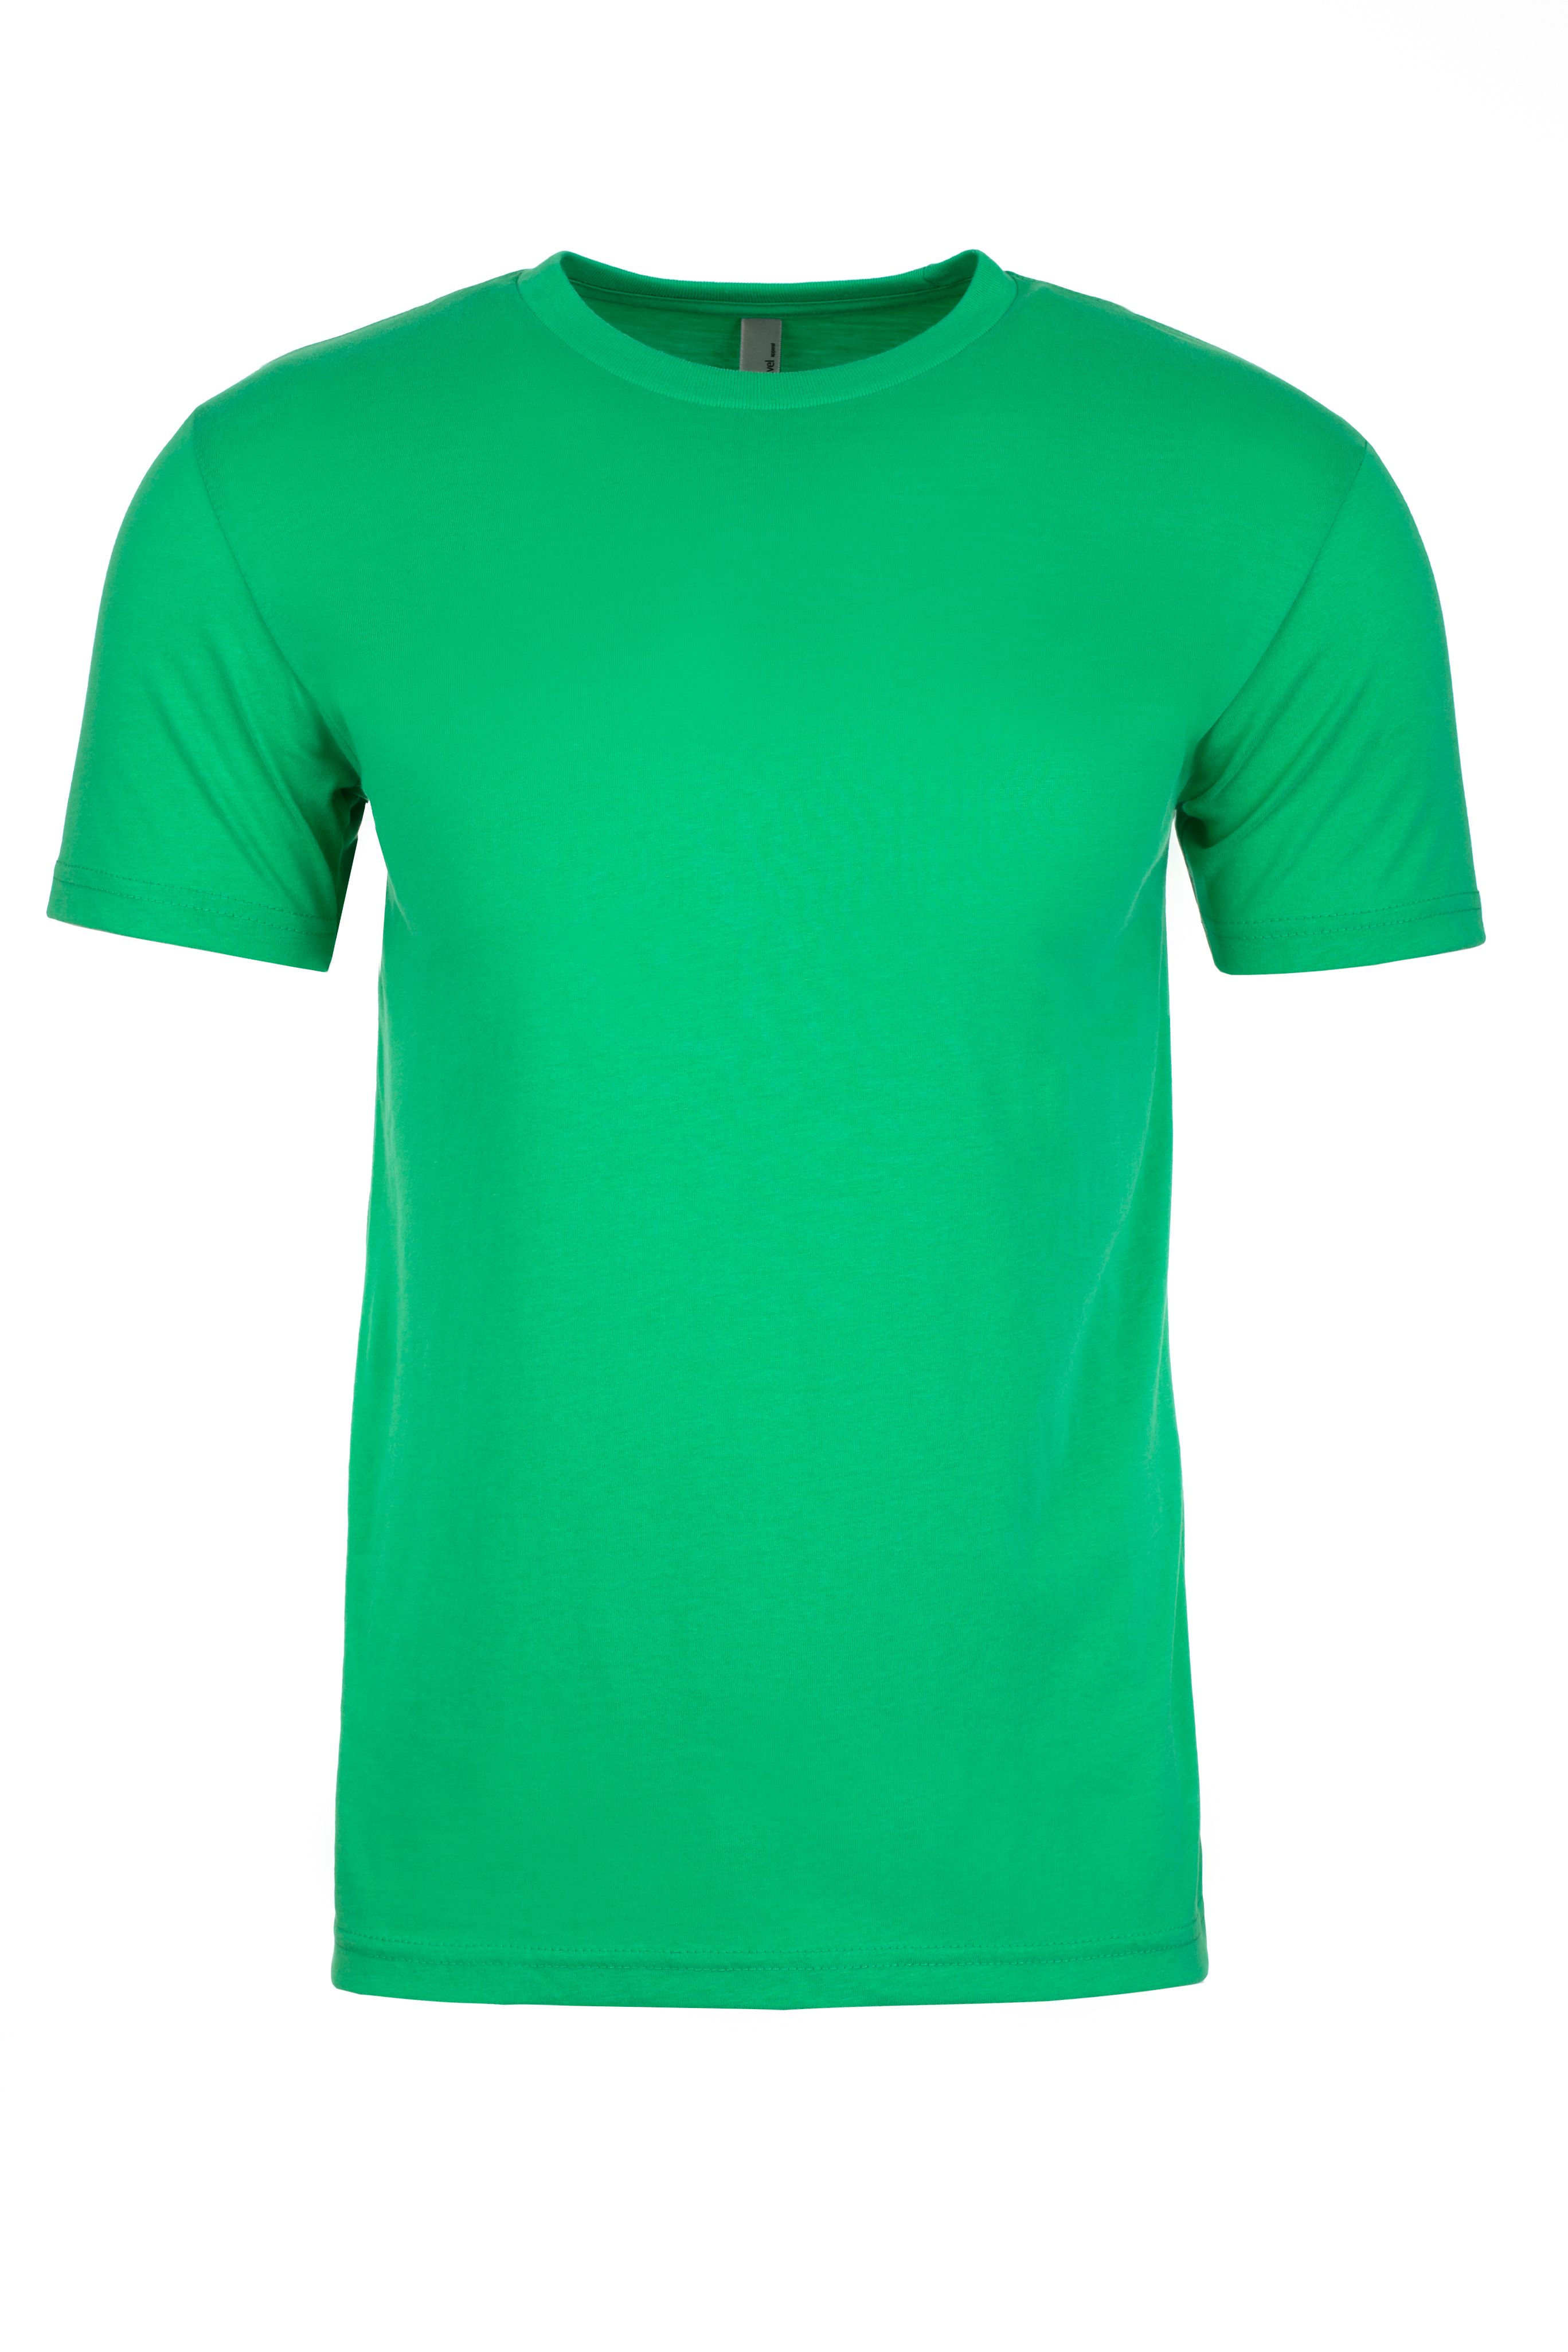 Next Level Apparel® 6410 Unisex Sueded T-Shirt